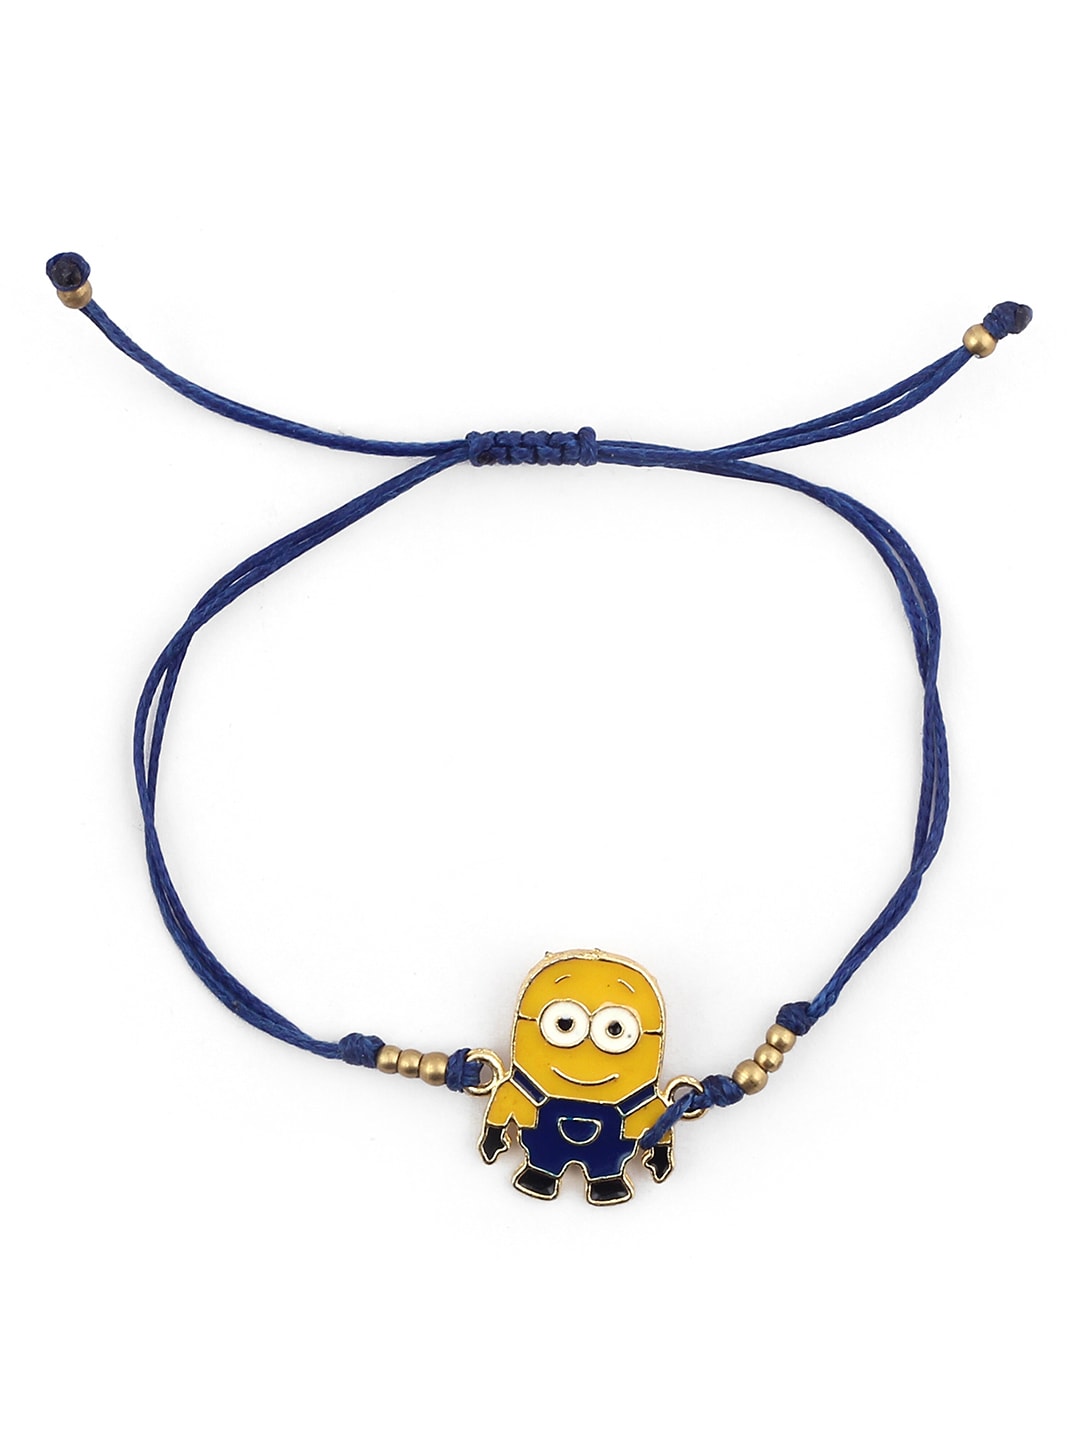 EL REGALO Girls Set of 2 Yellow & Blue Charm Bracelets - for Kids-Girls
Style ID: 17314094